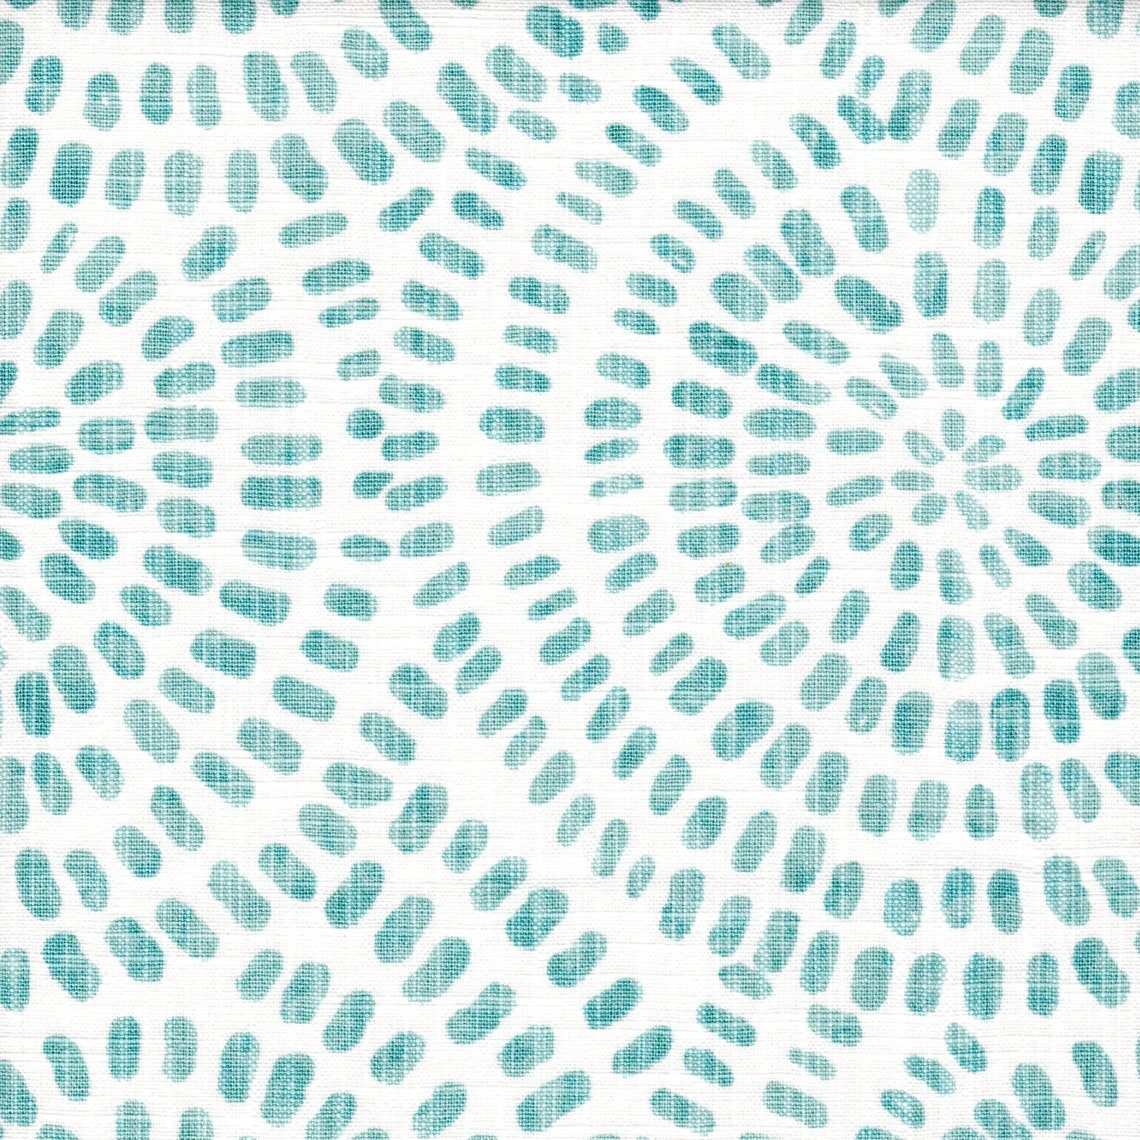 duvet cover in cecil cancun blue watercolor dot circular geometric